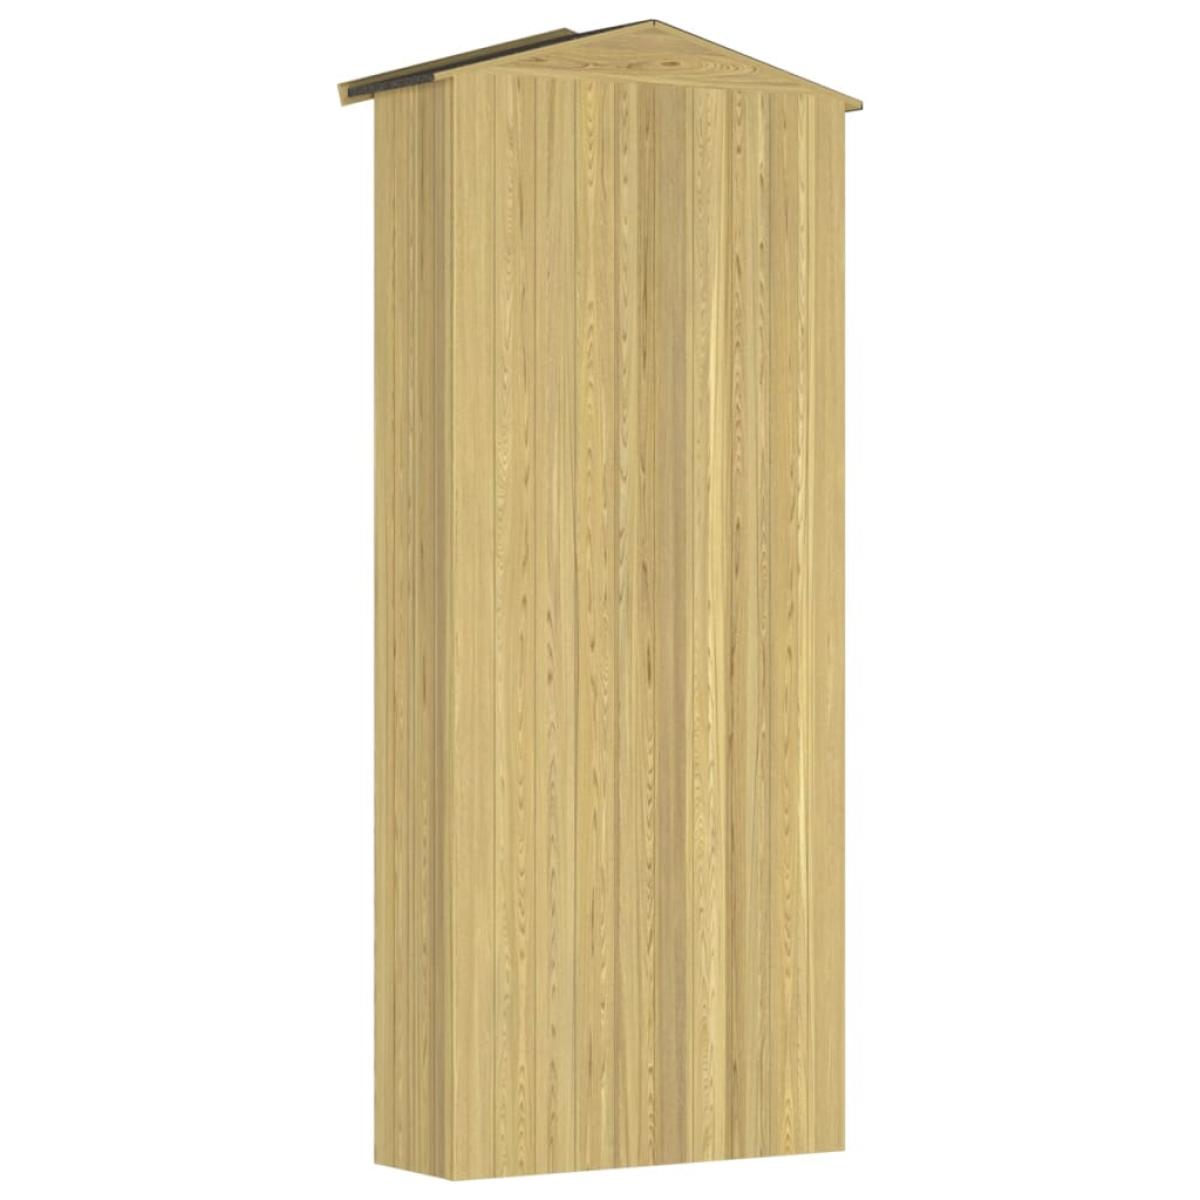 Caseta herramientas jardín madera pino impregnada 89x33x222 cm